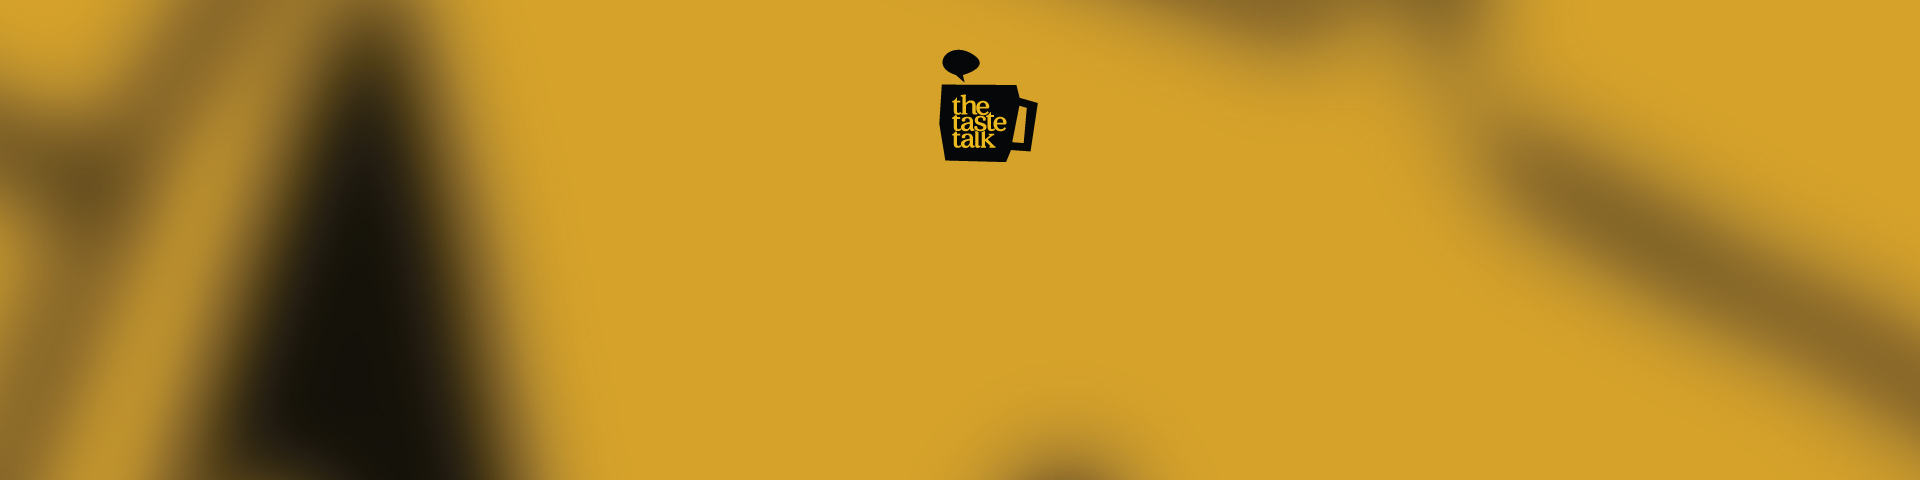 Series The Taste Talk - Từ cà phê ra câu chuyện 